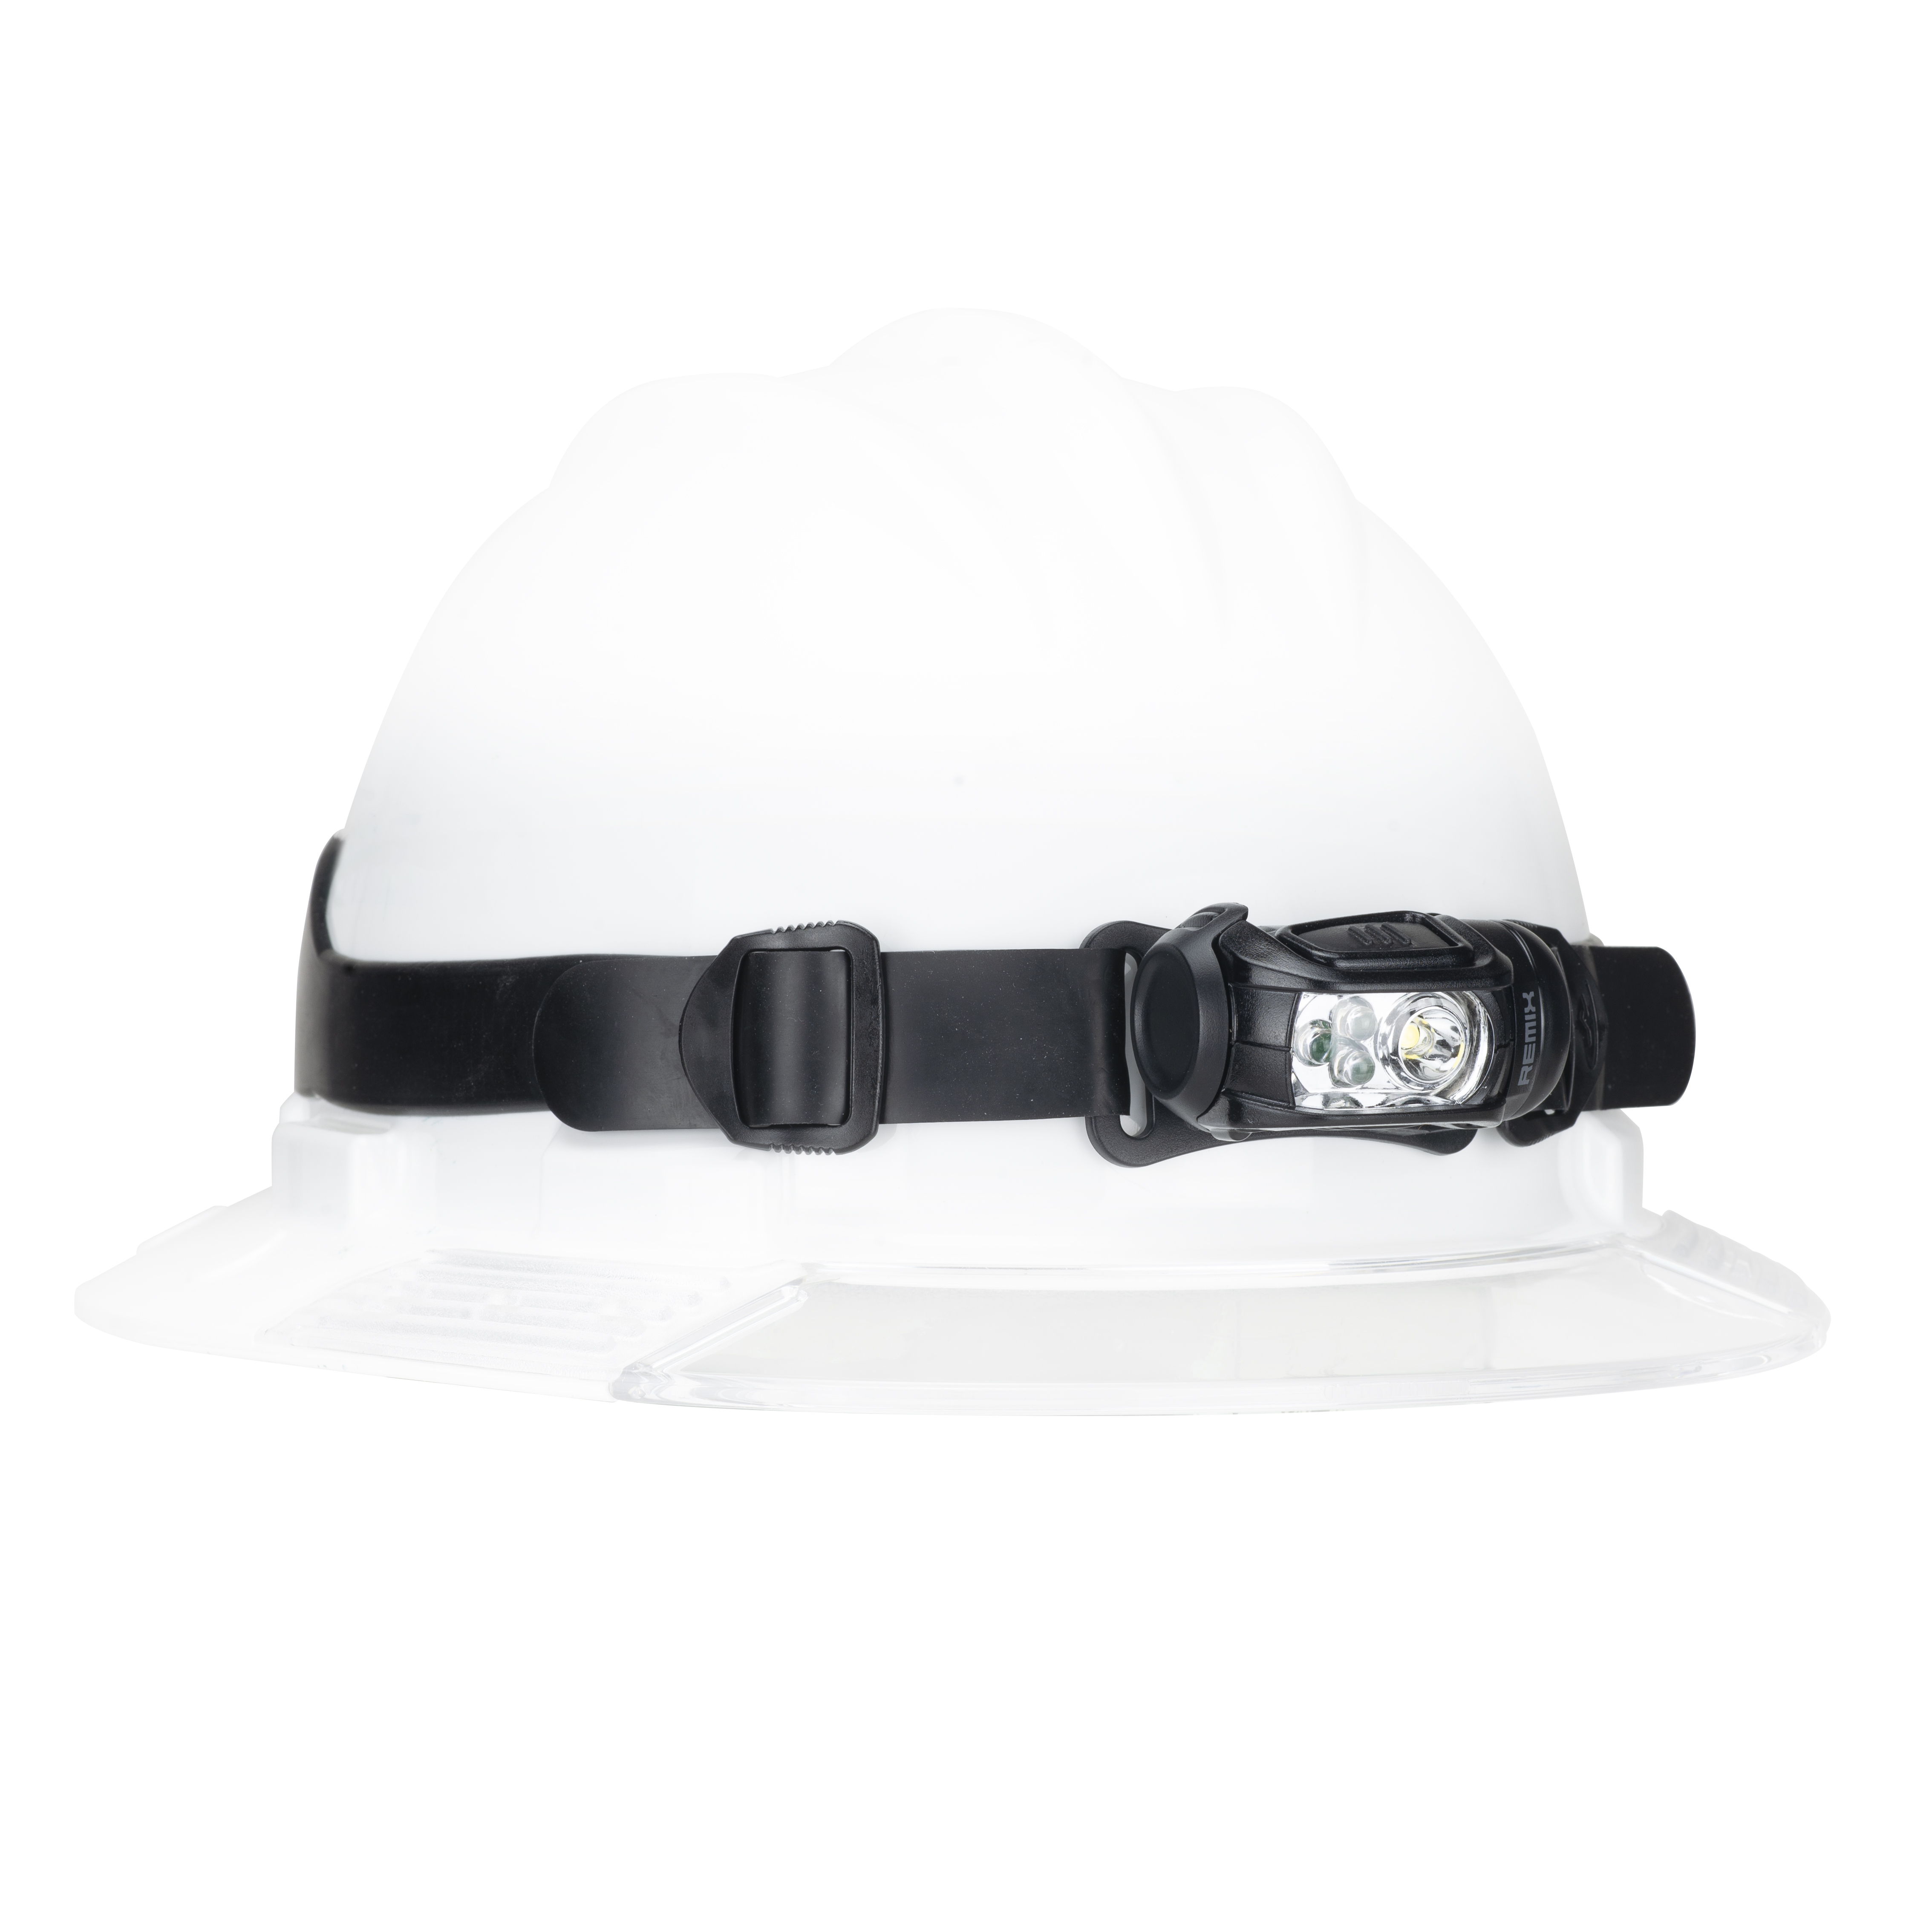 HEADLAMP, 450 LUMENS REMIX IND, BLACK/GRAY - Industrial Headlamps